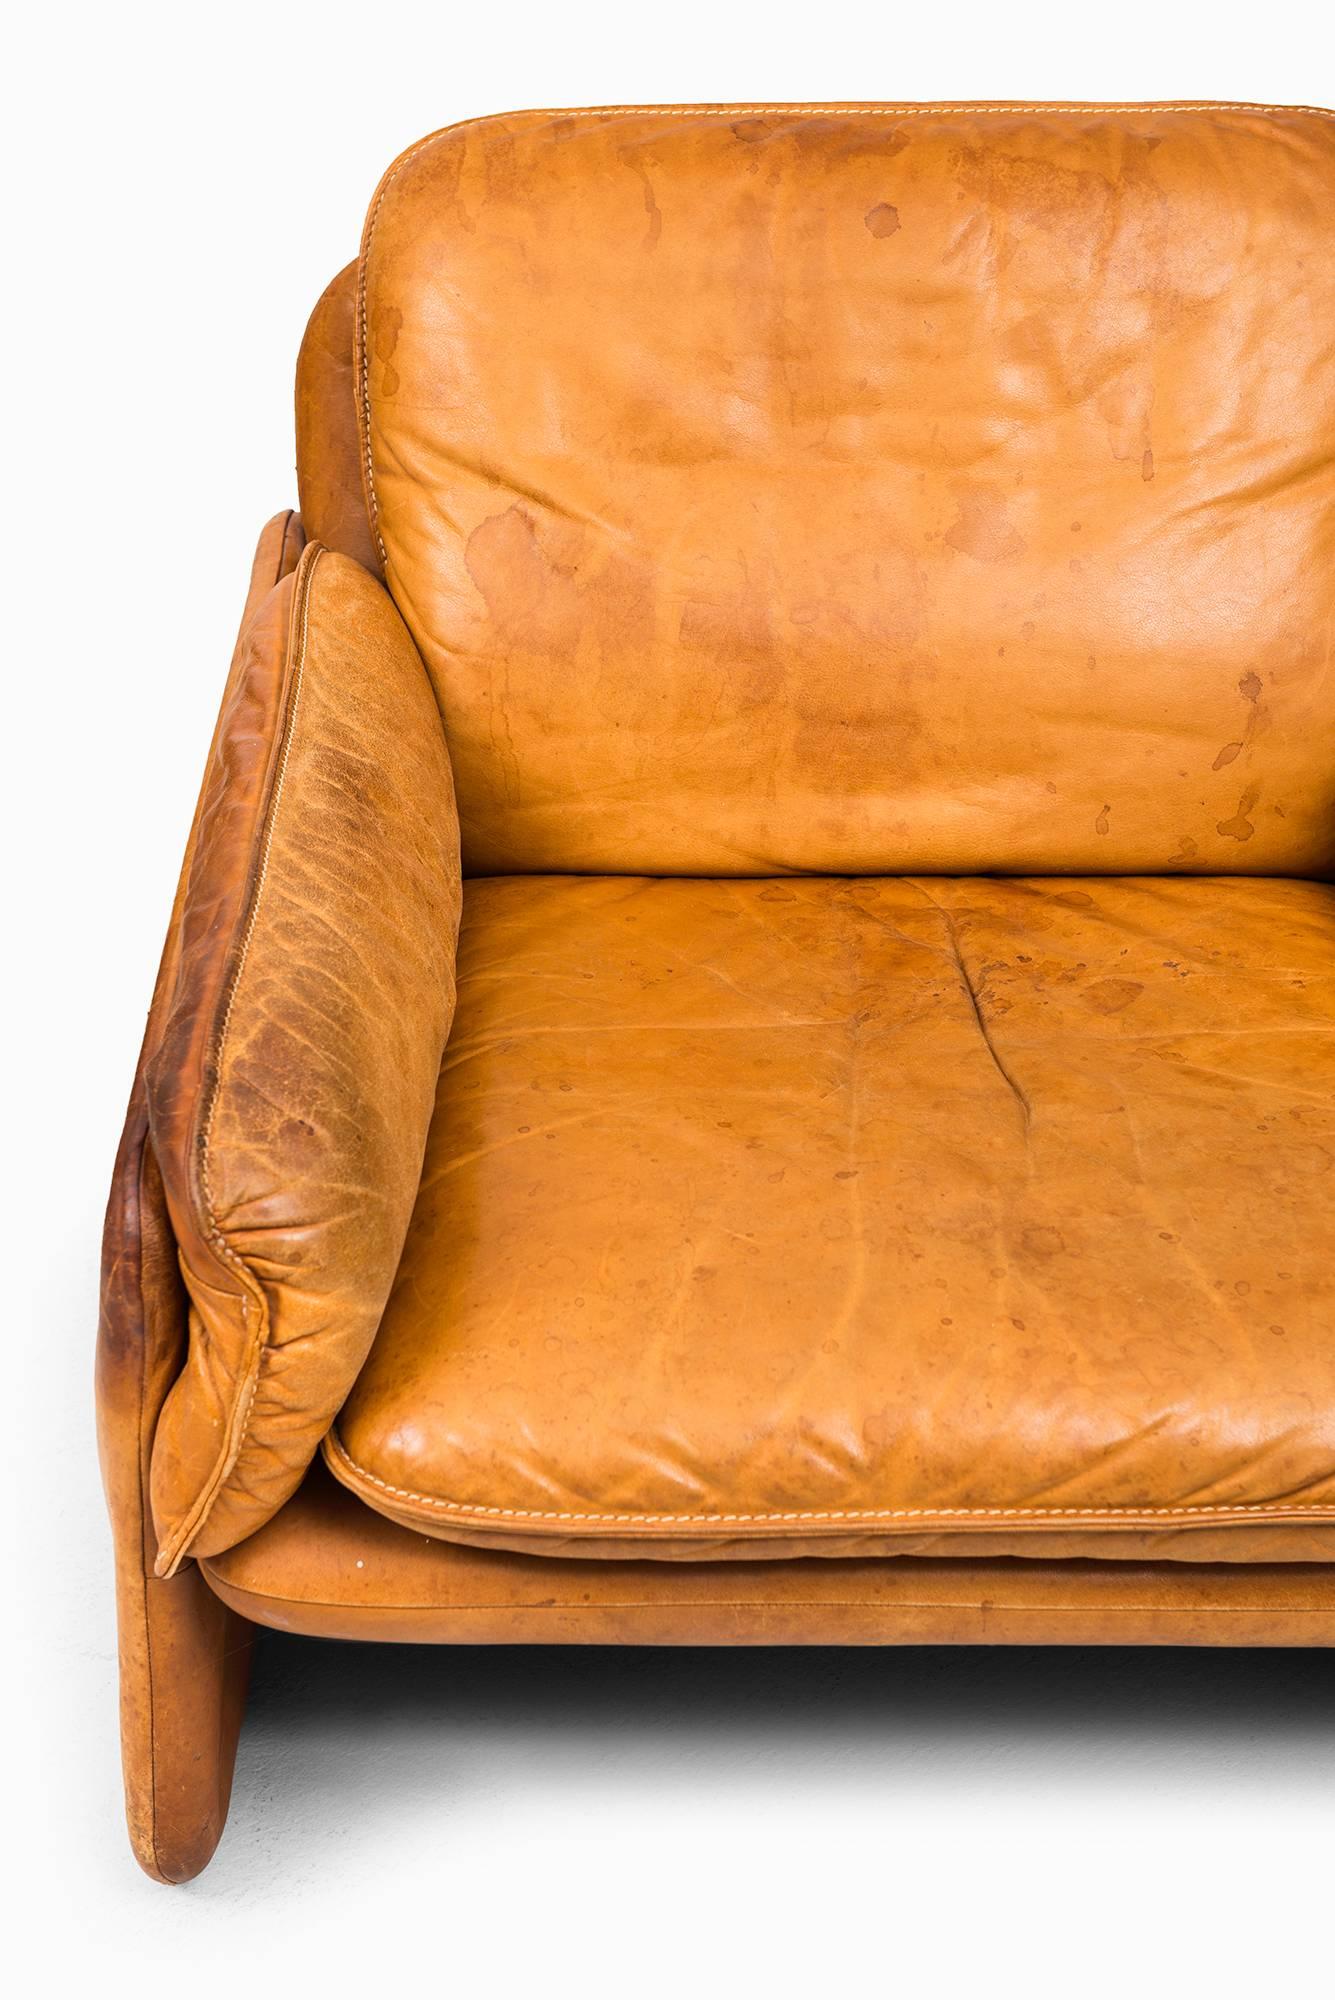 Swiss Easy Chairs in Cognac Brown Leather by De Sede in Switzerland